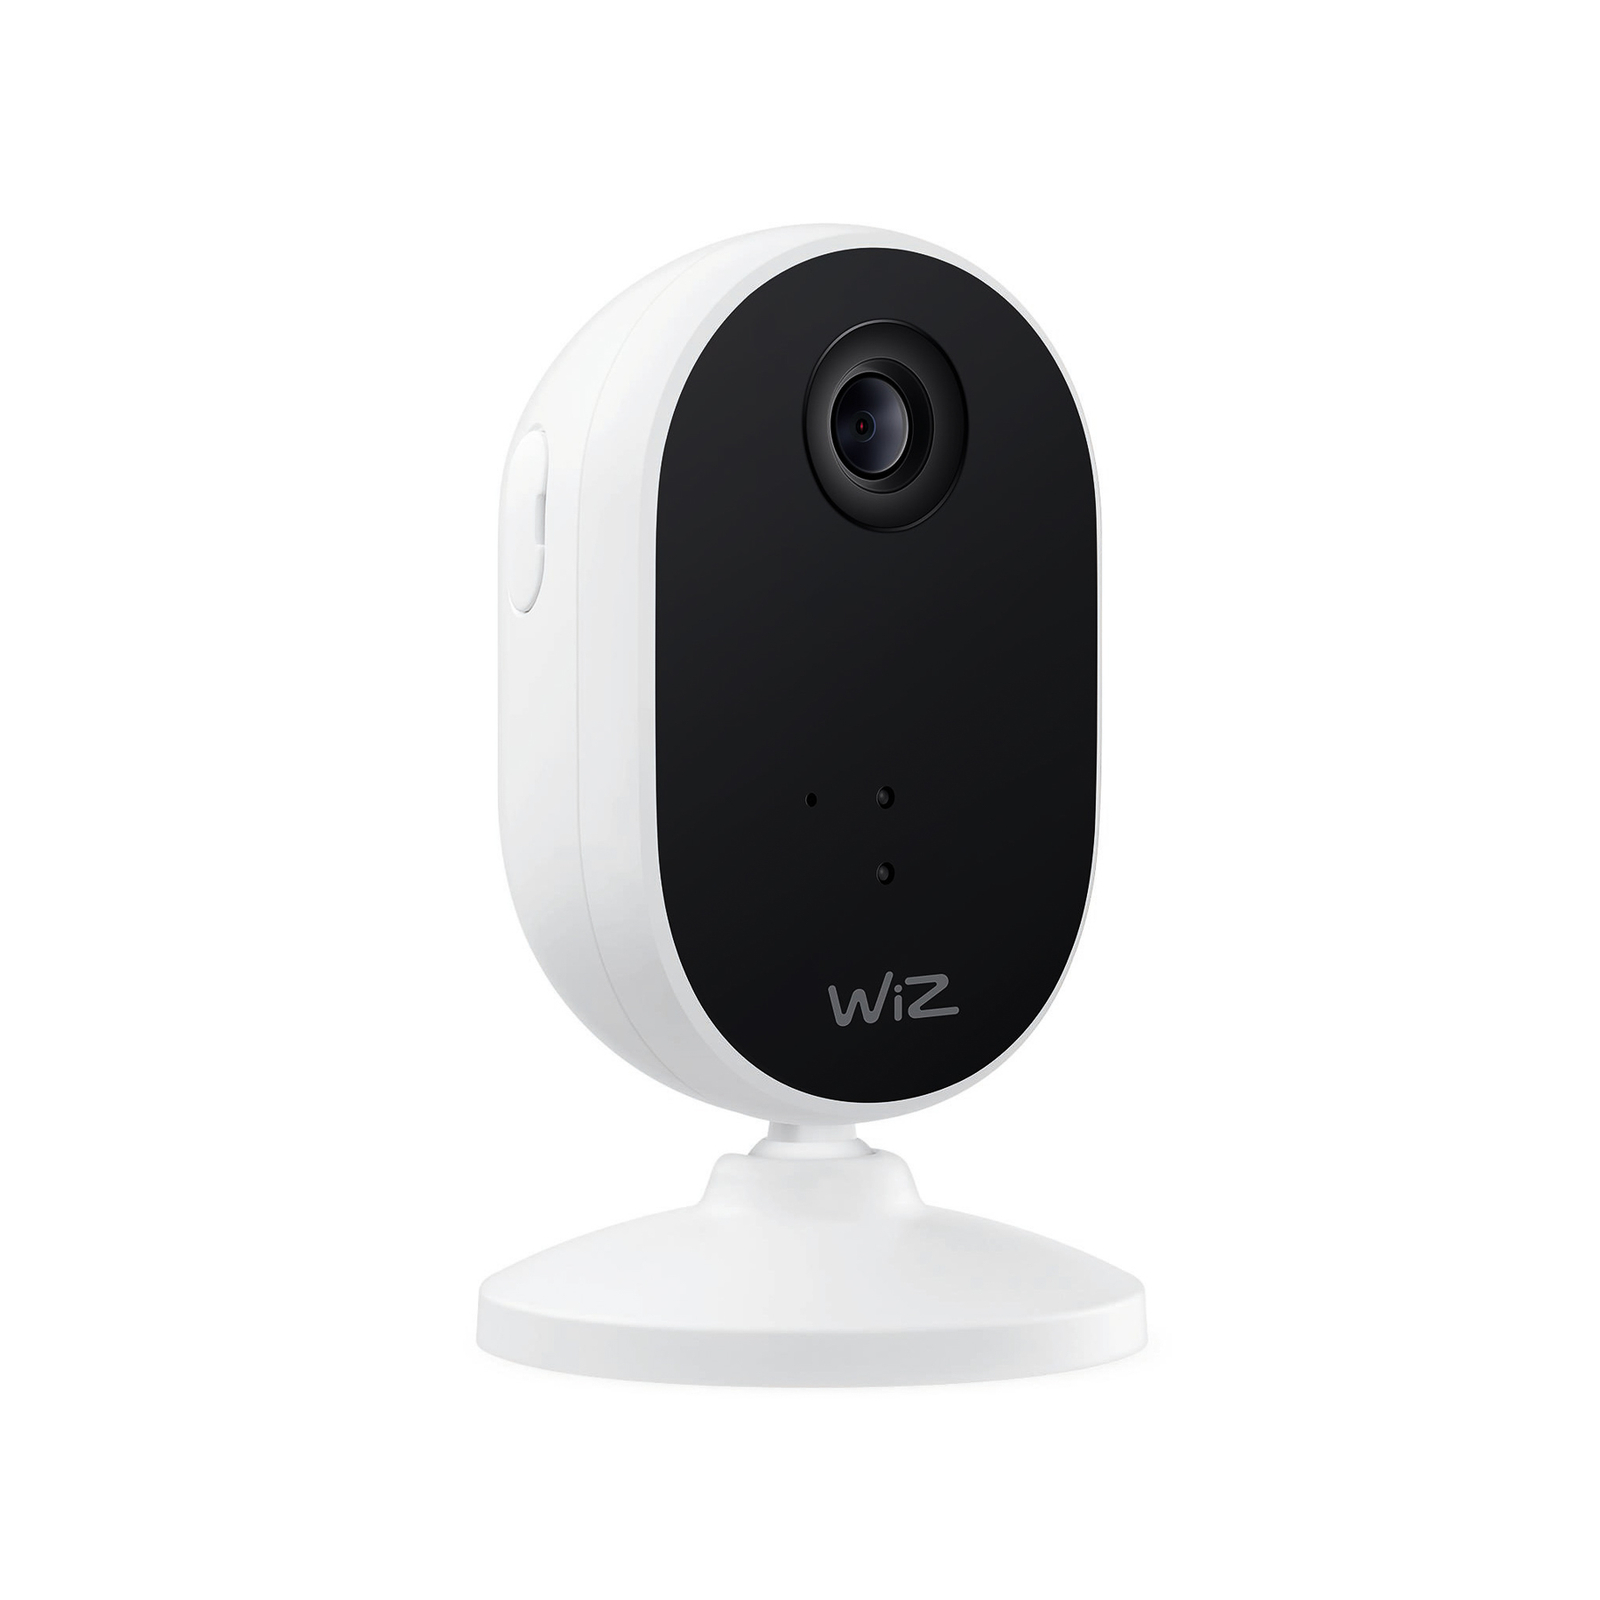 WiZ Indoor Security Kamera z Wi-Fi